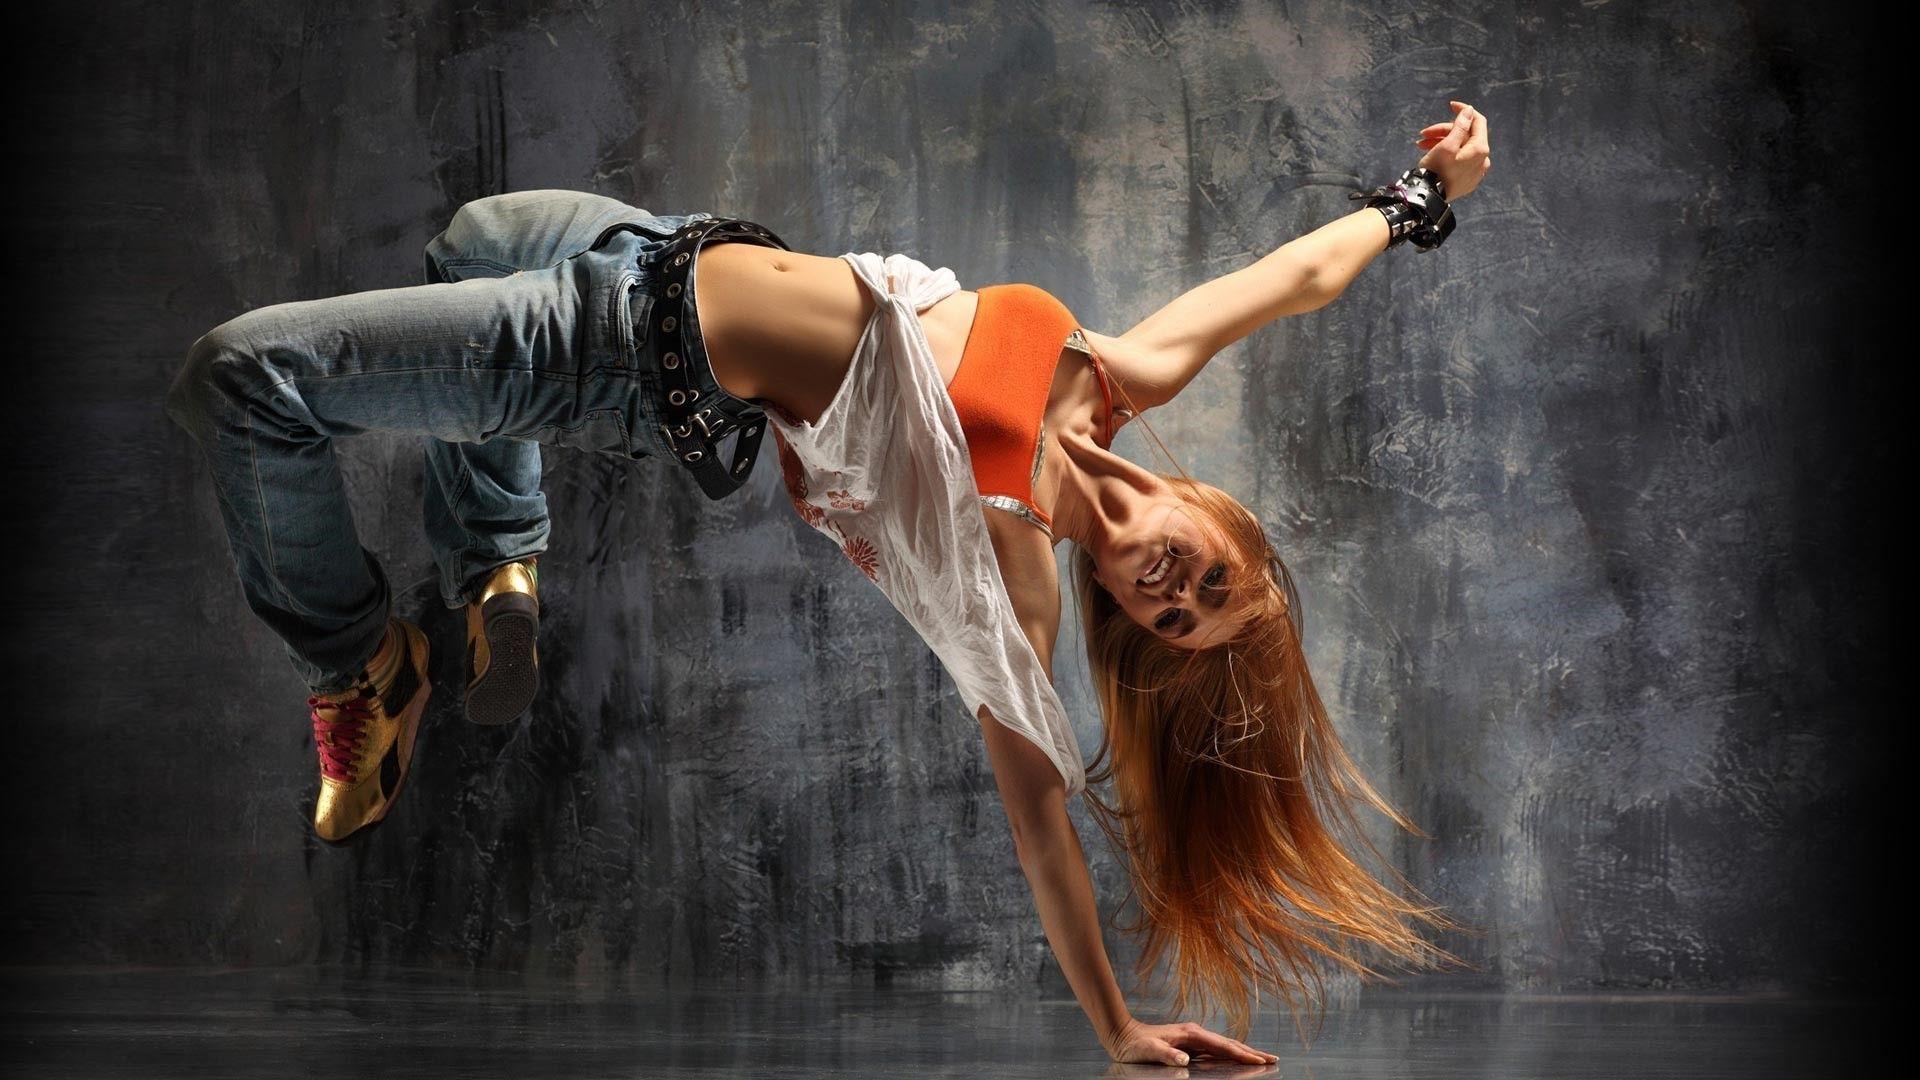 Super Dancing by Girl Wallpaper HD Wallpaper. Dance